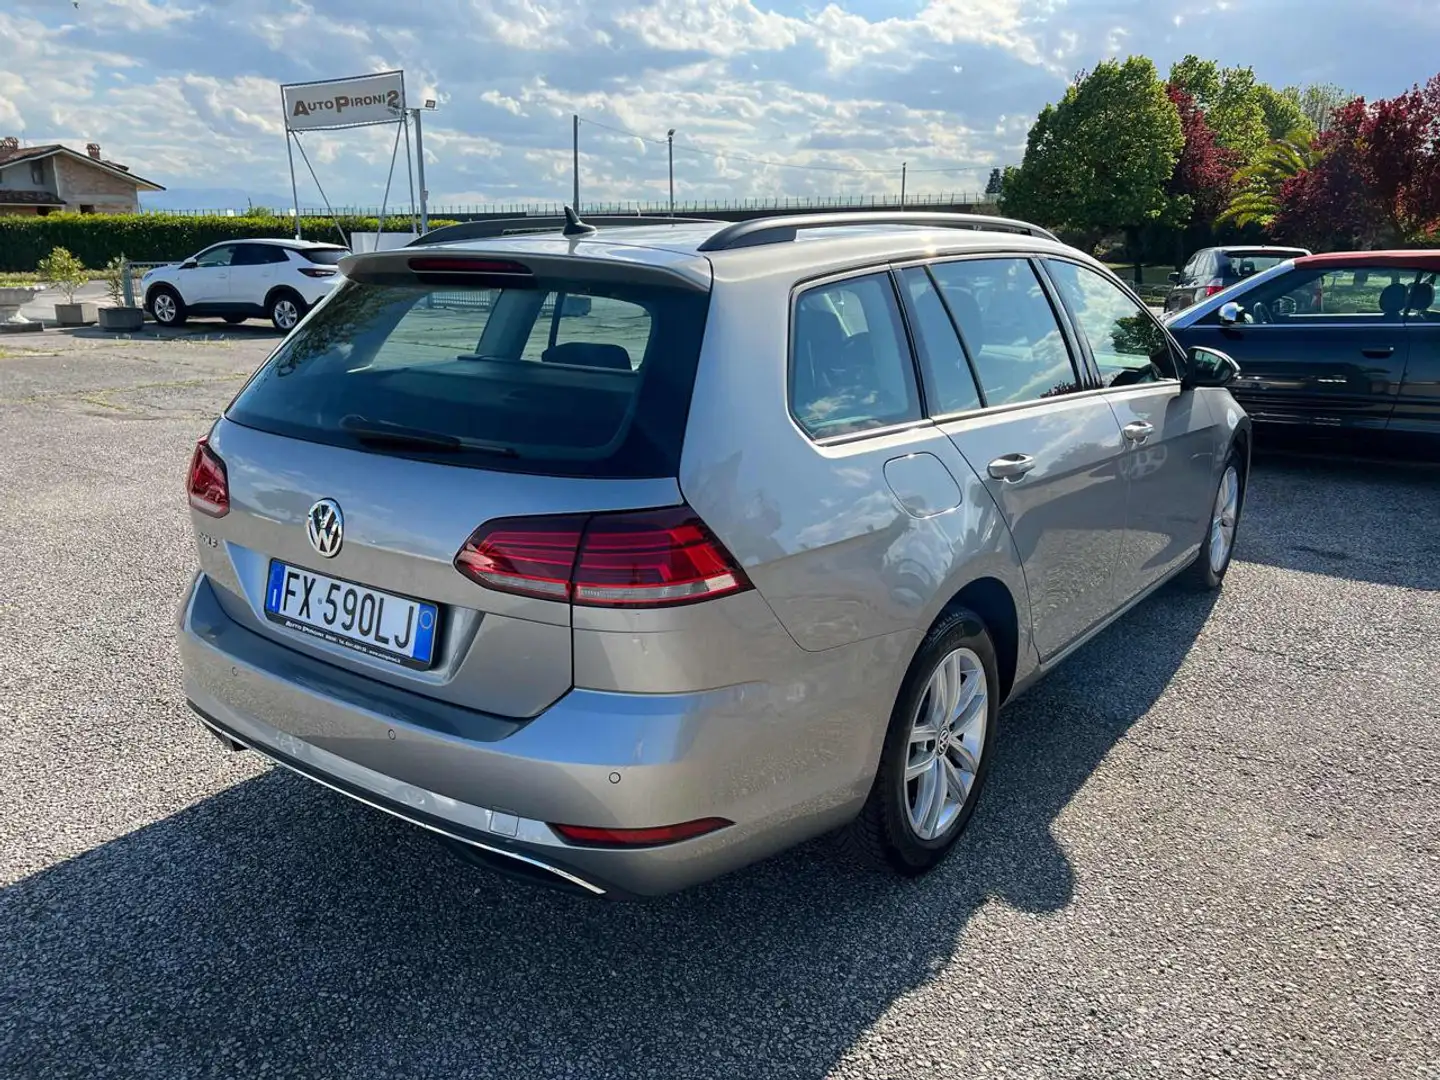 usato Volkswagen Golf Variant Station wagon a Rimini RN per € 15.500,-